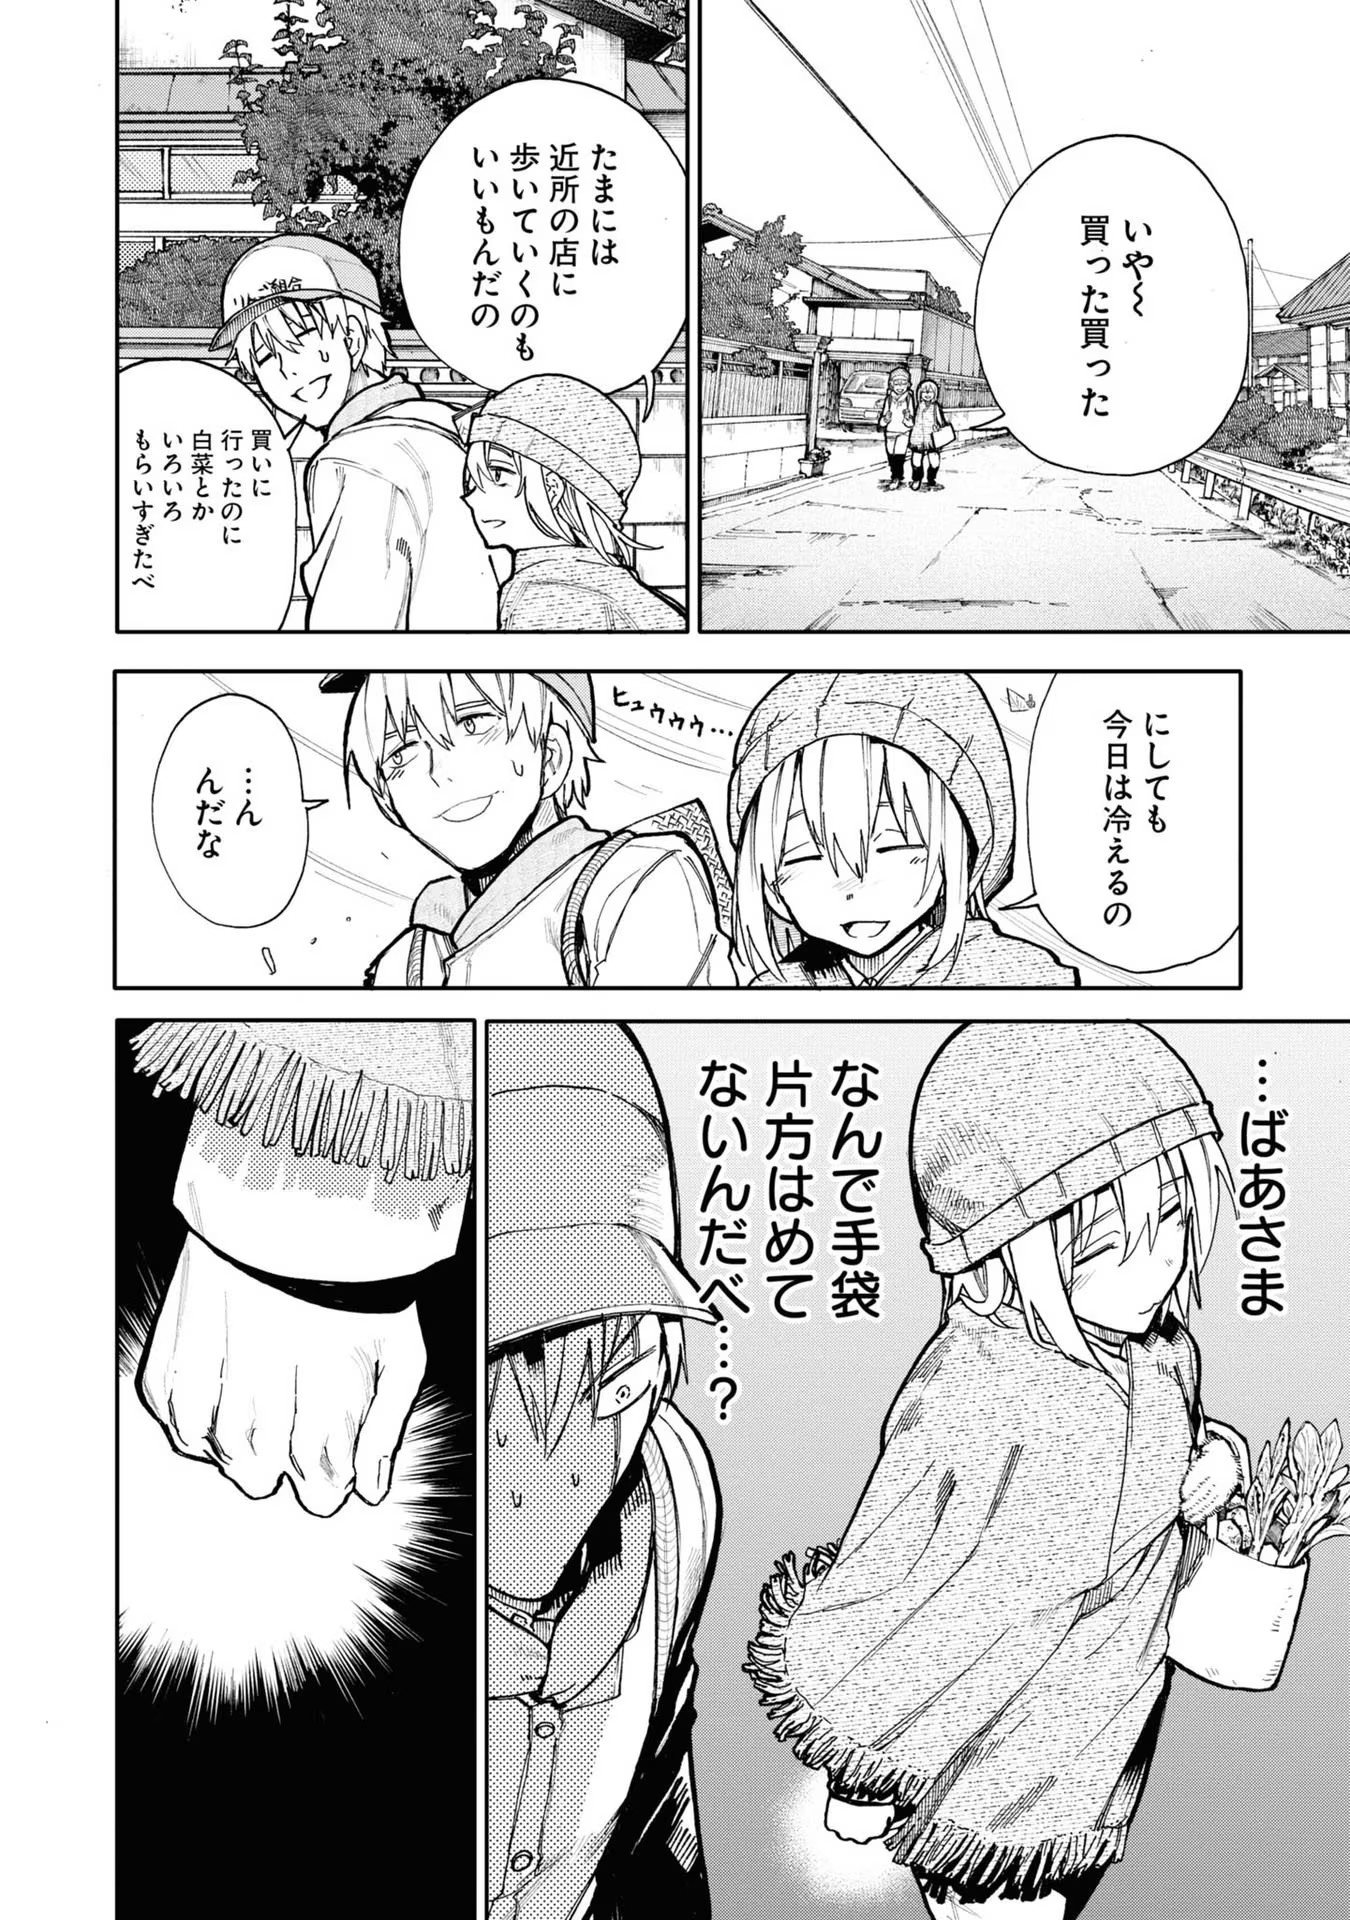 Ojii-san to Obaa-san ga Wakigaetta Hanashi - Chapter 65 - Page 2